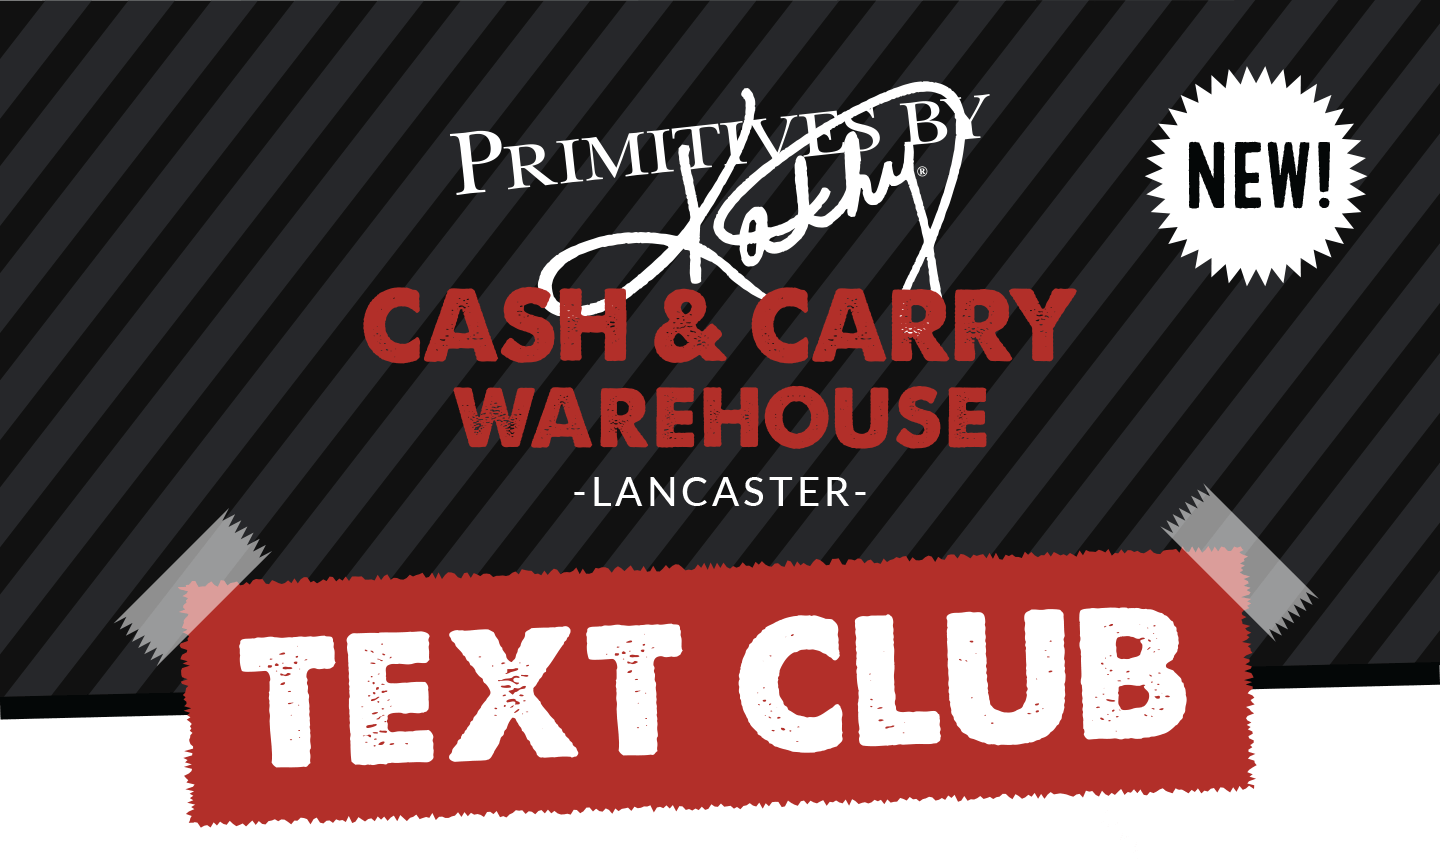 Primitives by Kathy  |  Cash & Carry Warehouse Lancaster  |  TEXT CLUB